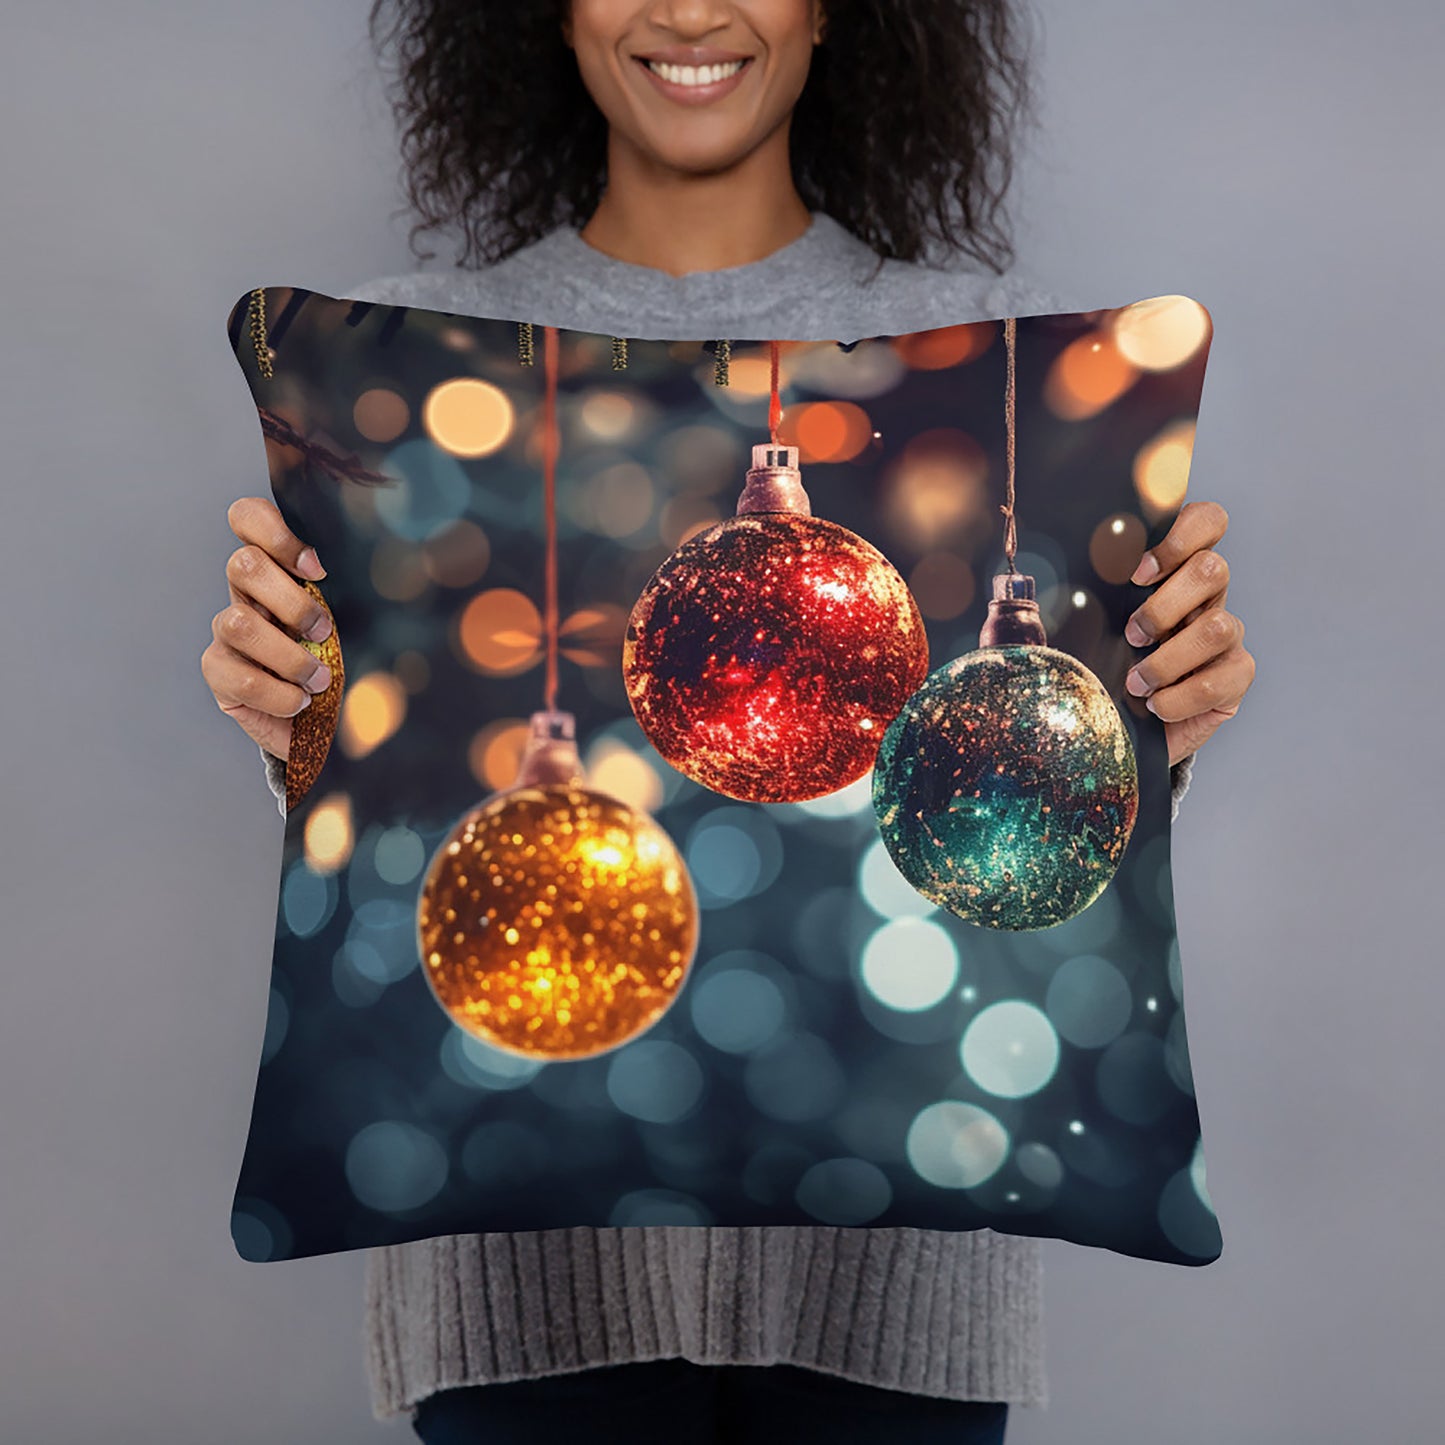 Christmas Throw Pillow Ornament Sparkle Polyester Decorative Cushion 18x18